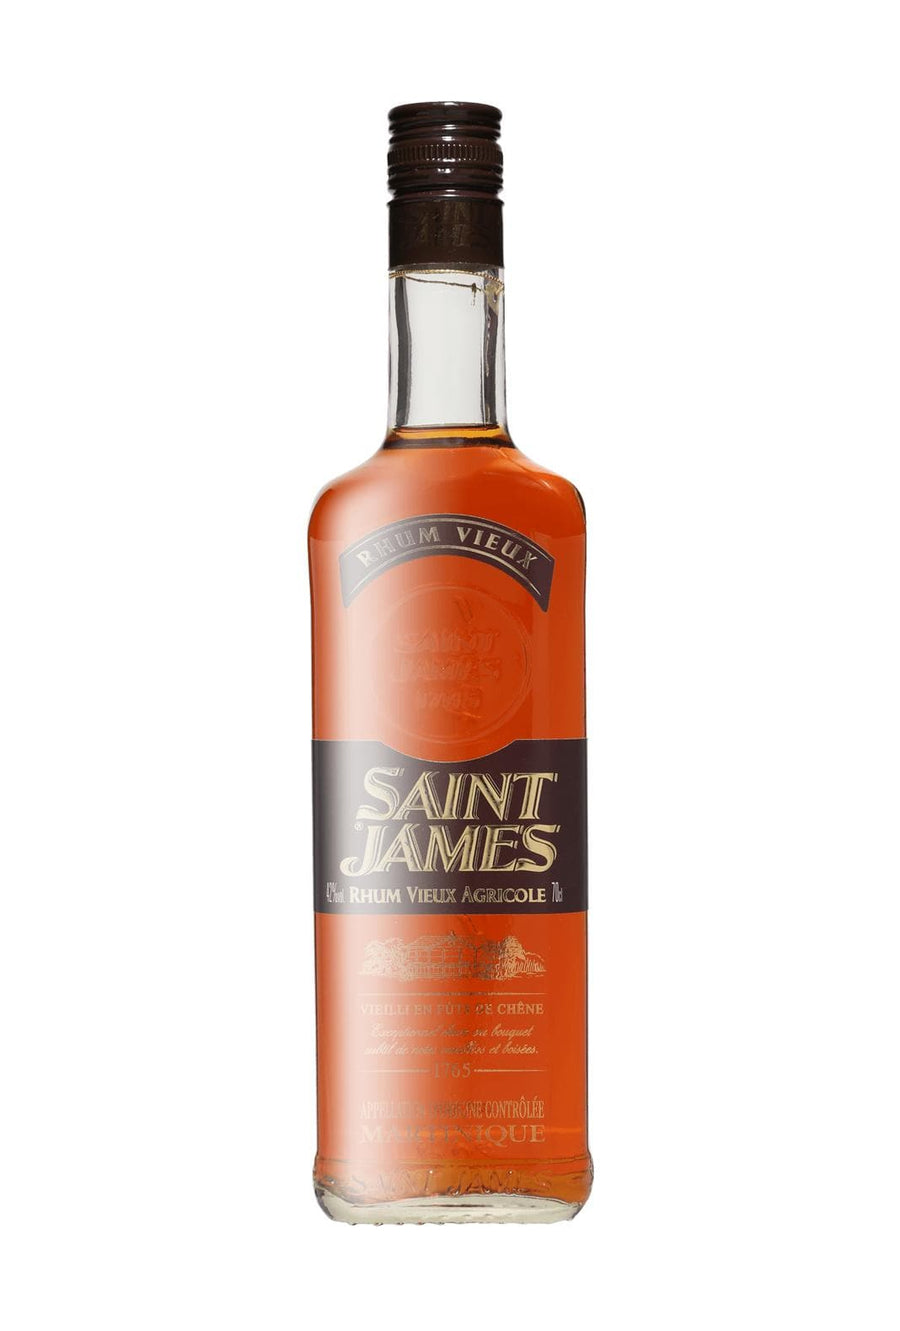 St James Rum Agricole Vieux (Old) 40% 700ml | Rum | Shop online at ...